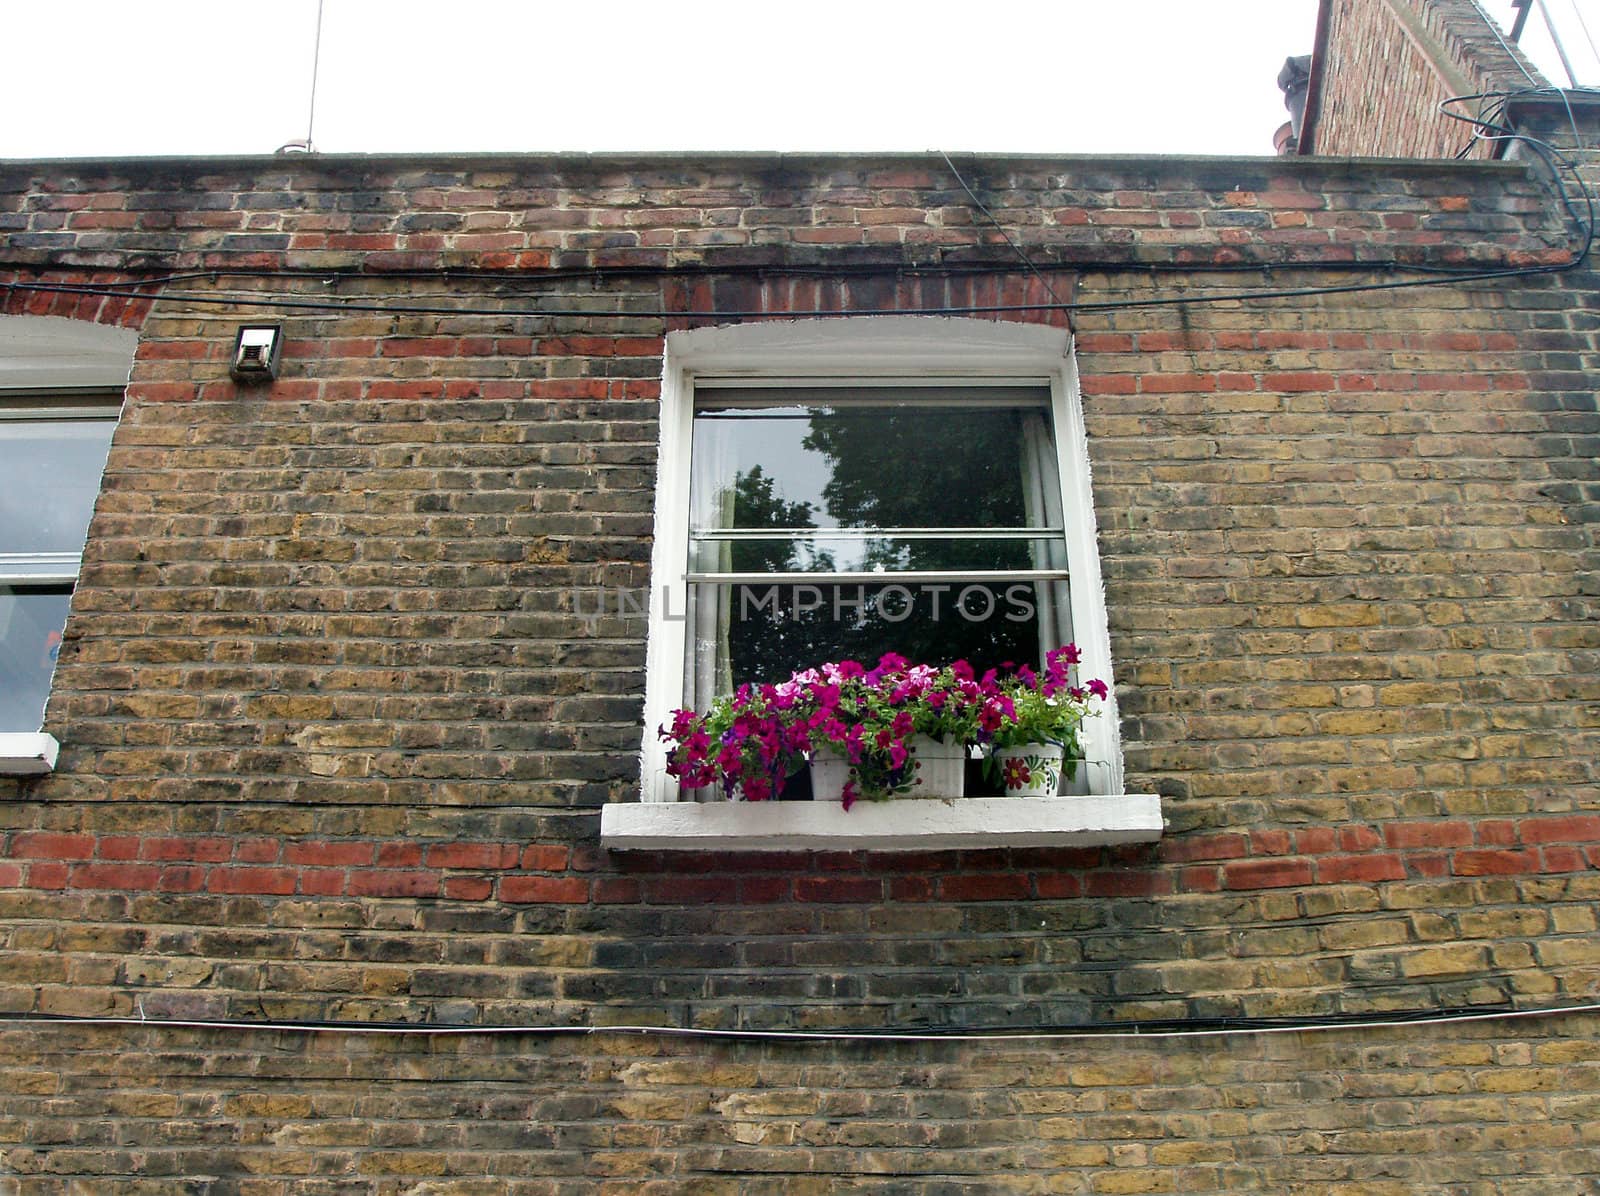 Windows with flowers by jol66